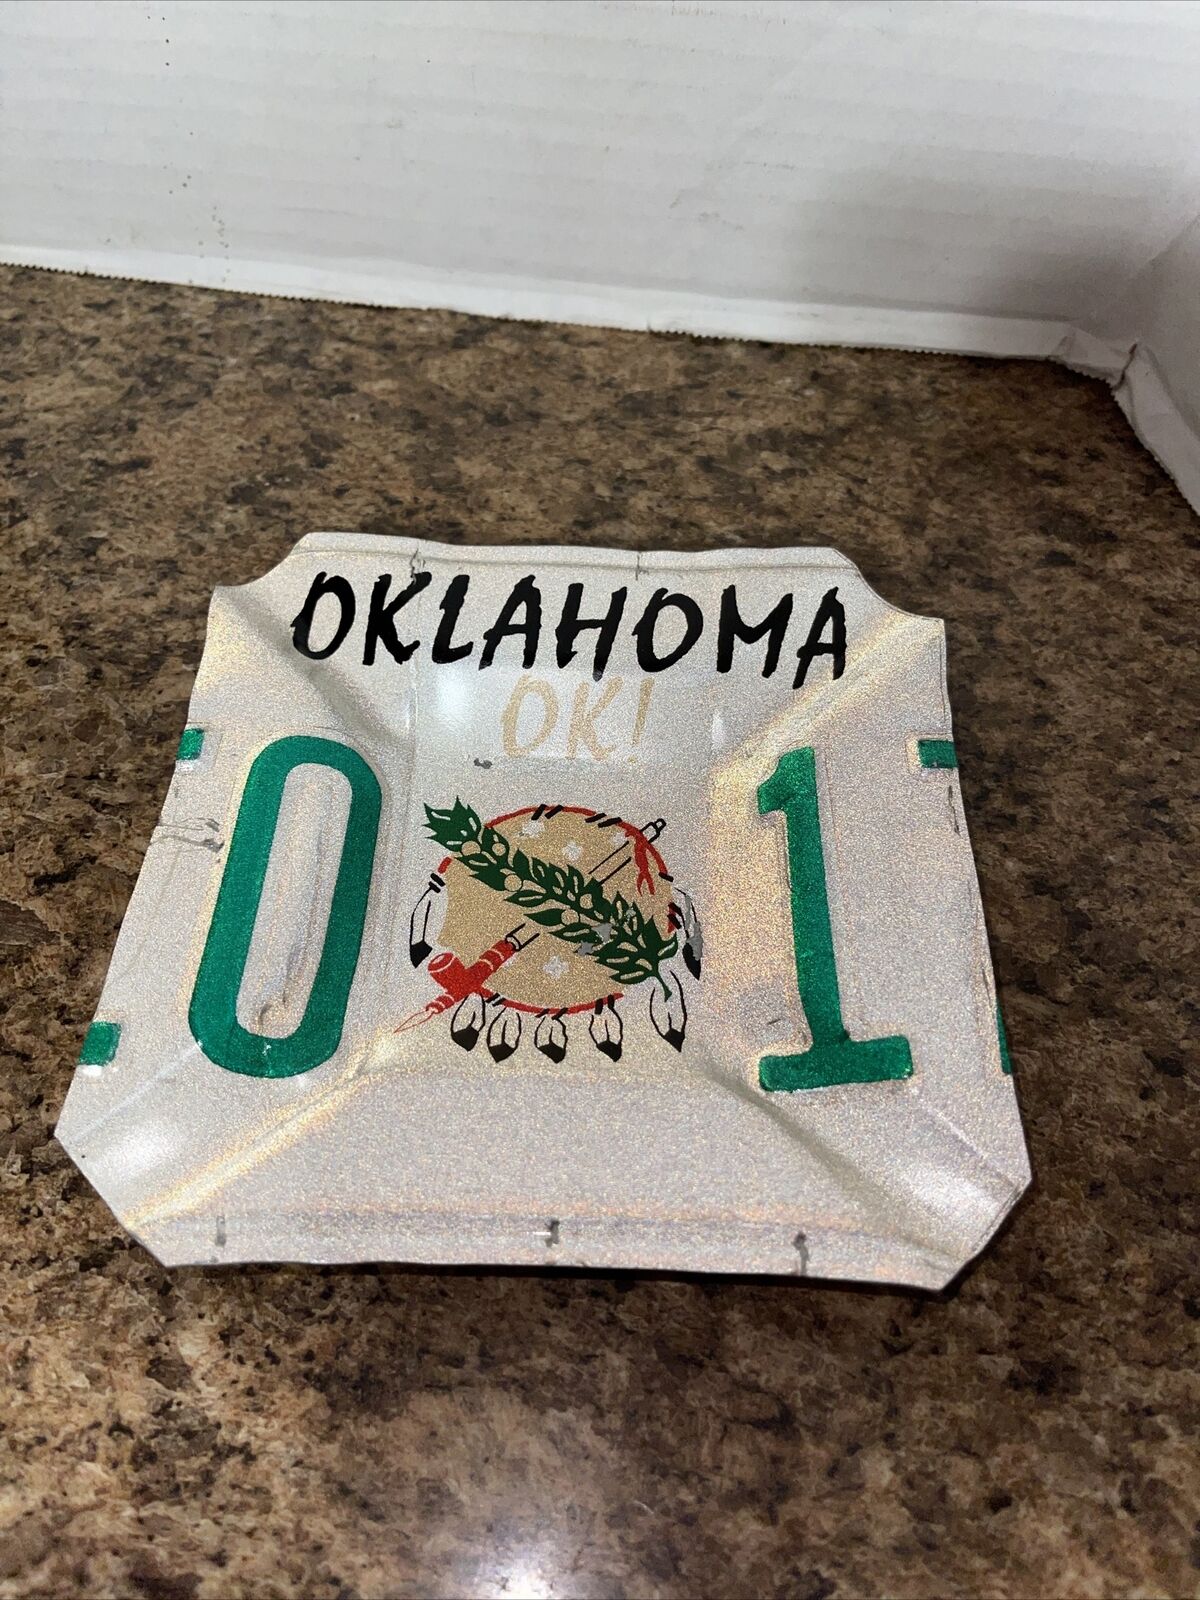 Original Authentic Oklahoma License Plate Ashtray Oklahoma OK 0 1